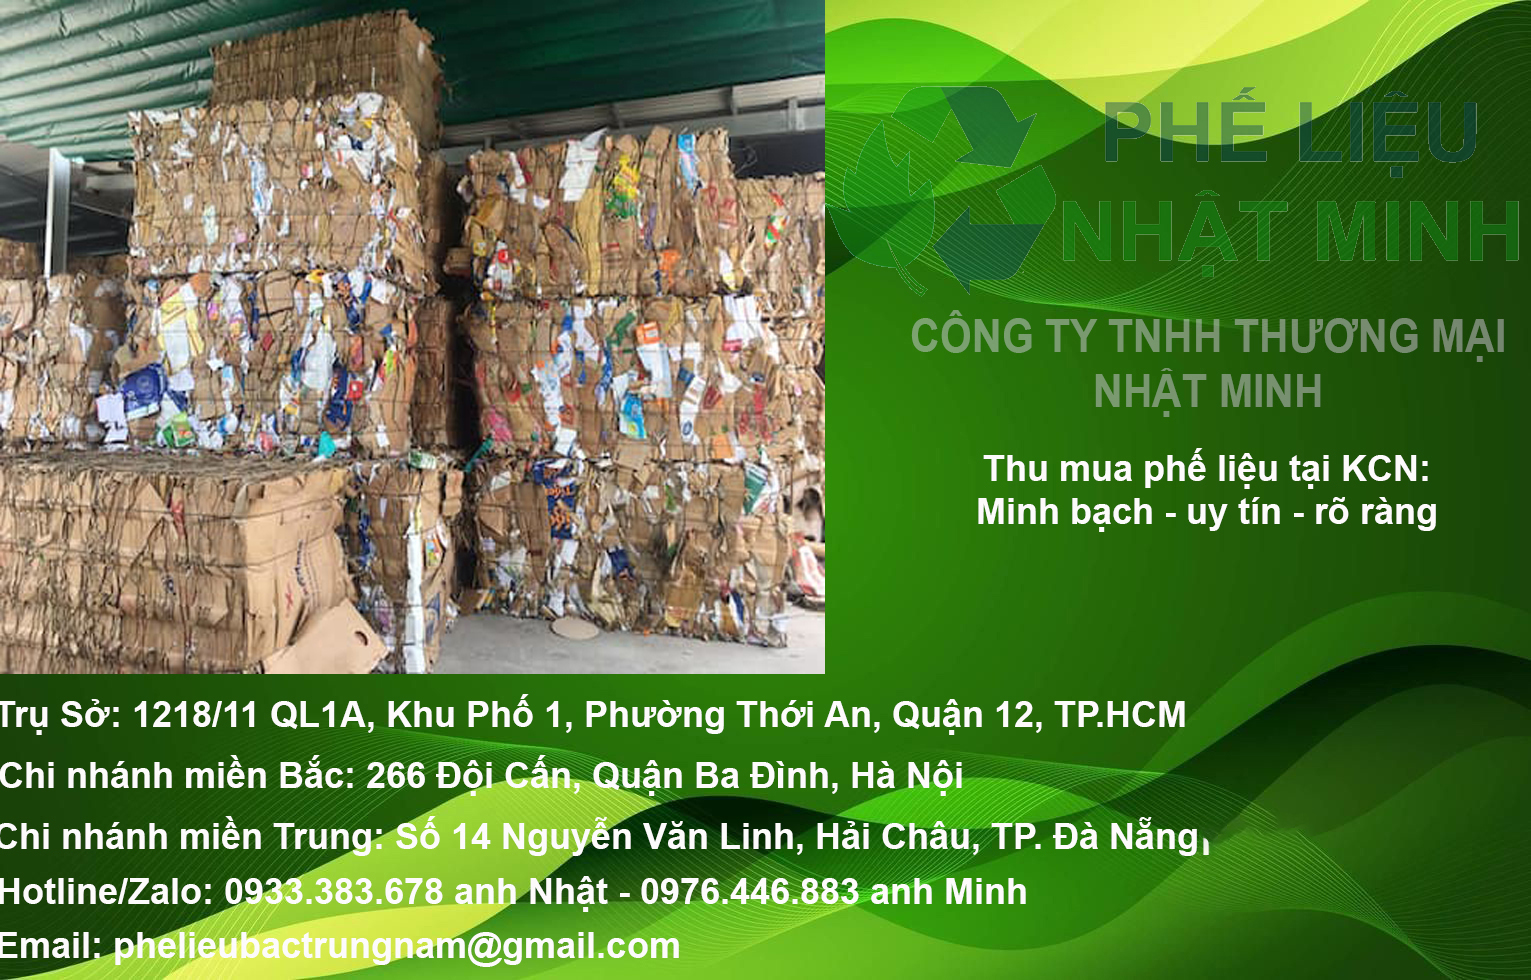 Thu Mua Phe Lieu Tron Goi Gia Cao Nhat Minh 2